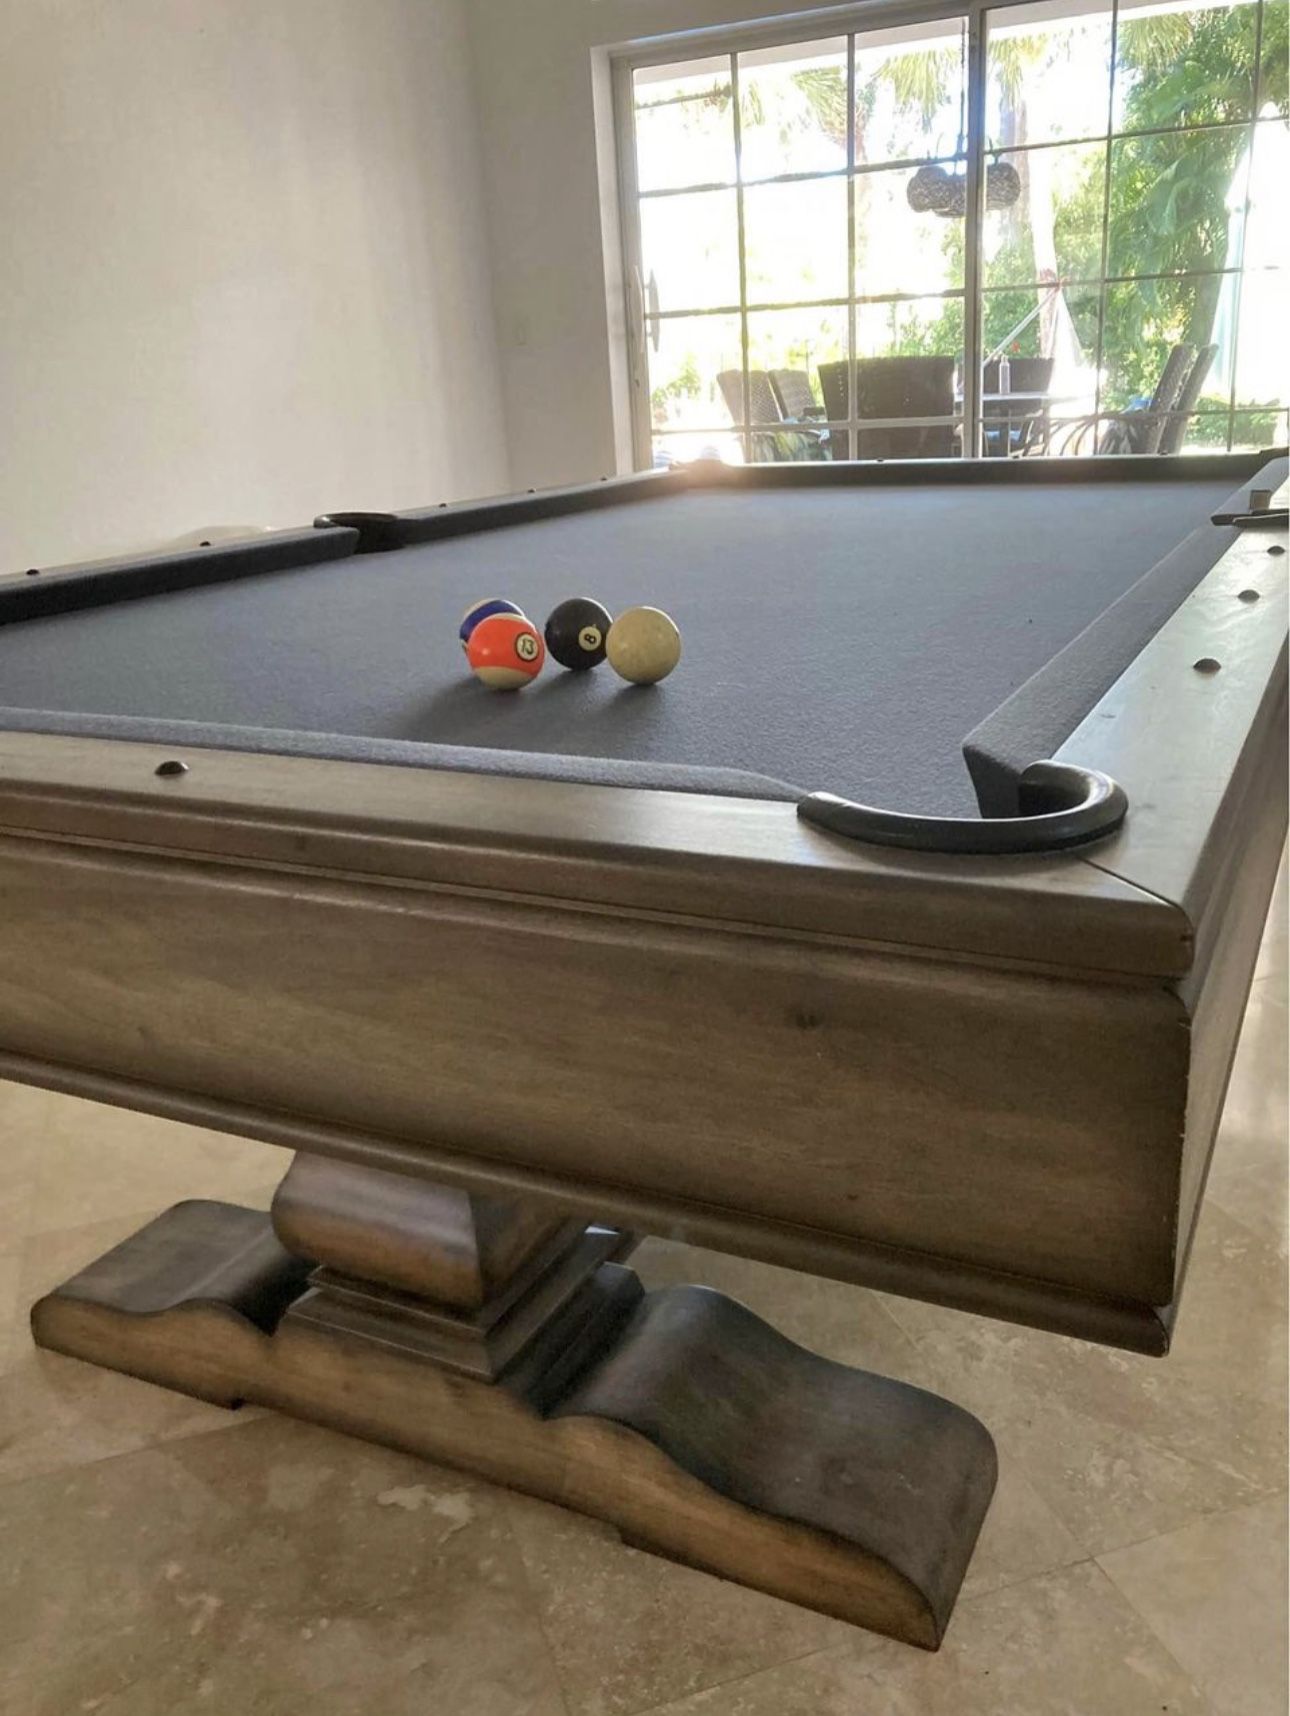 Pool Table - Restoration Hardware 